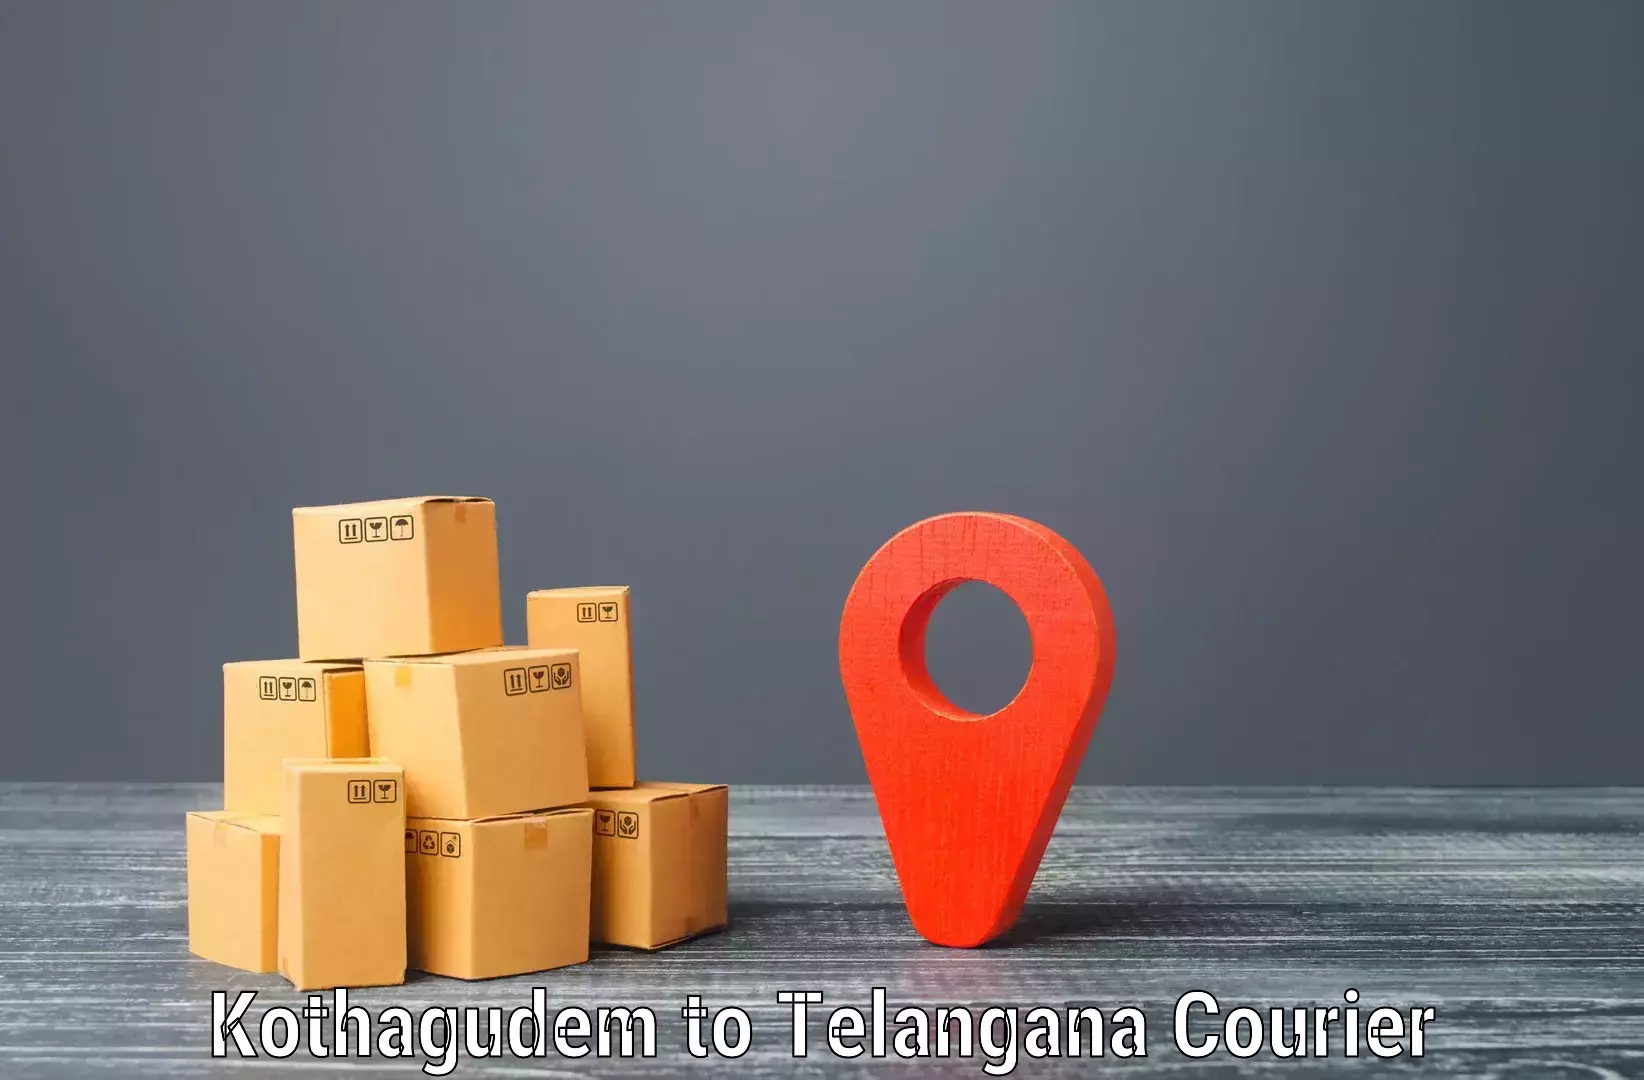 Tech-enabled shipping Kothagudem to Yellareddy